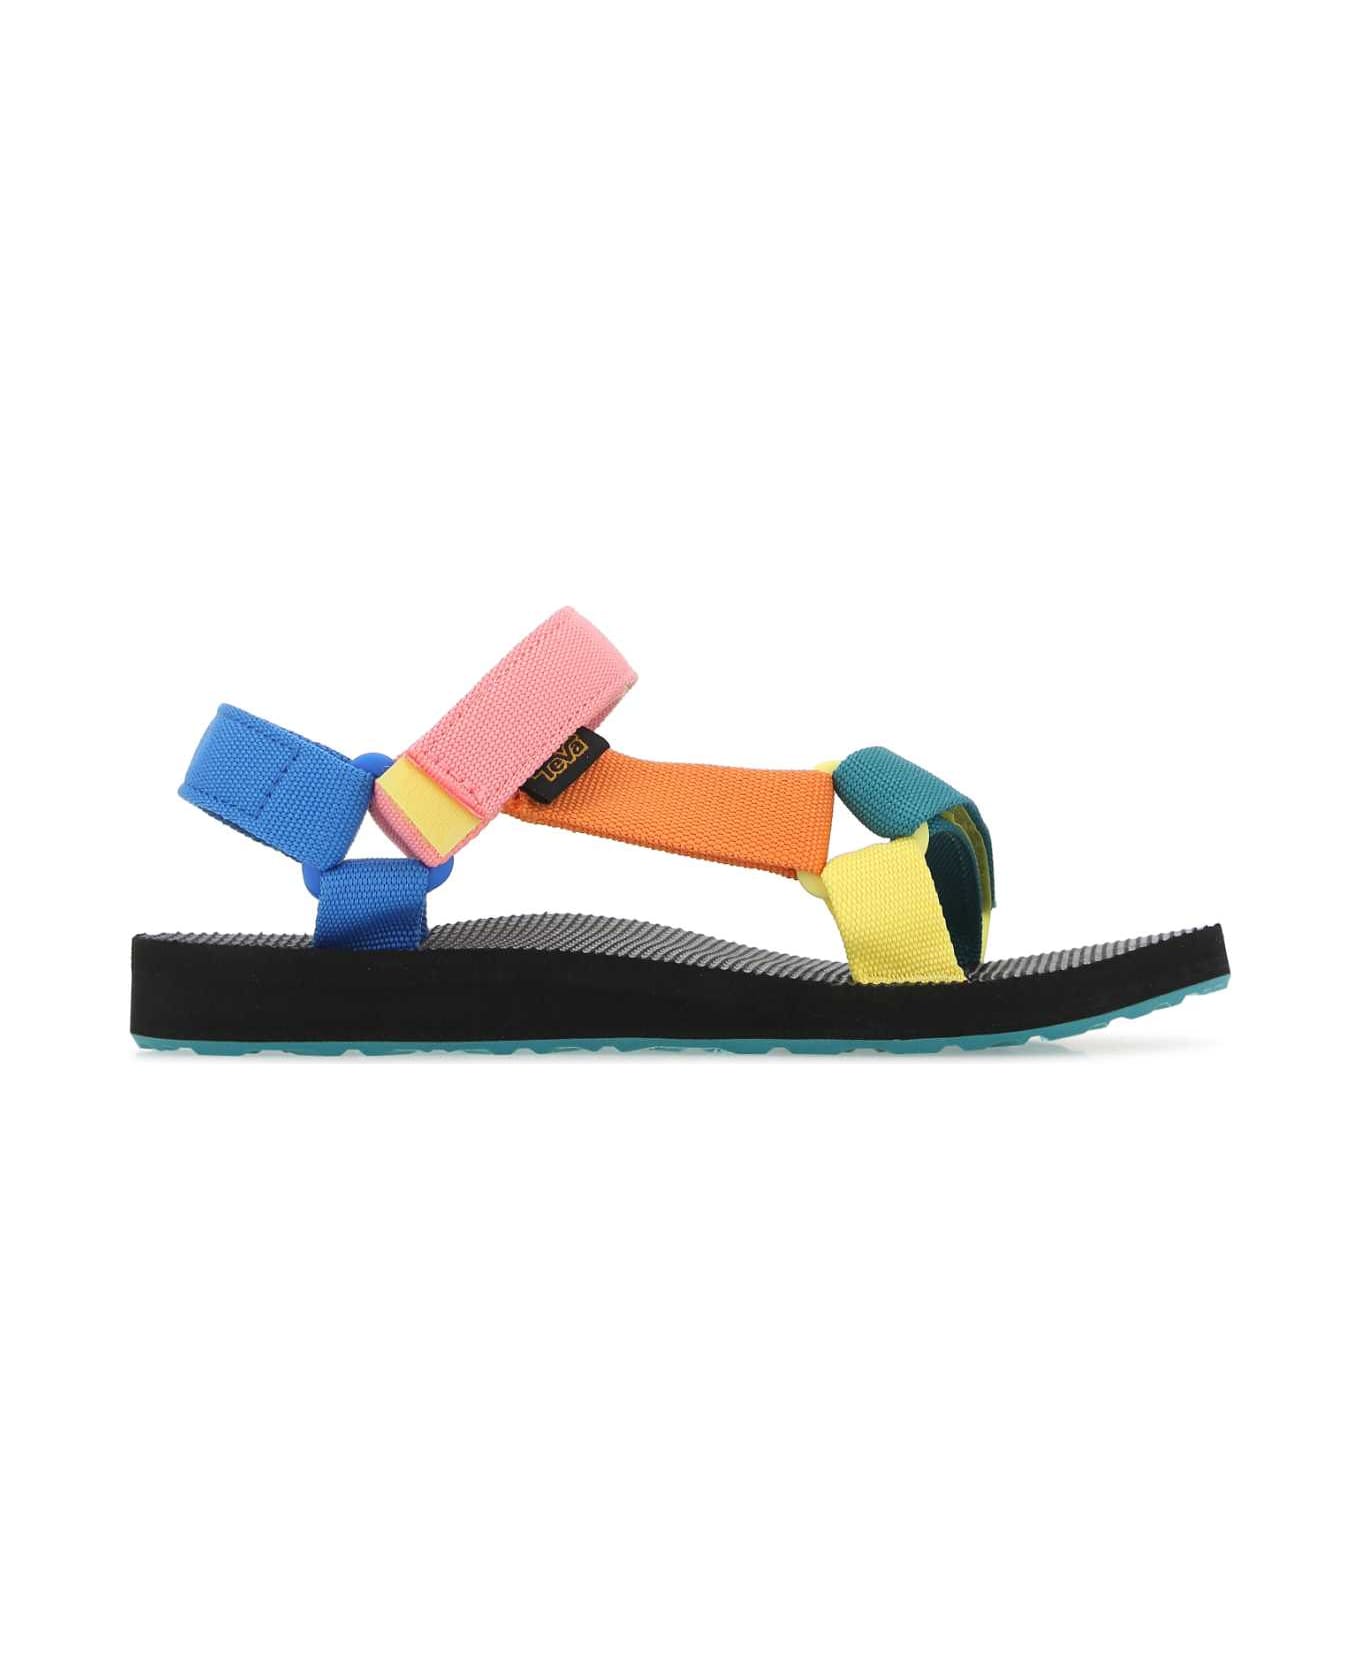 Teva Multicolor Polyester Original Universal Sandals - SMU サンダル